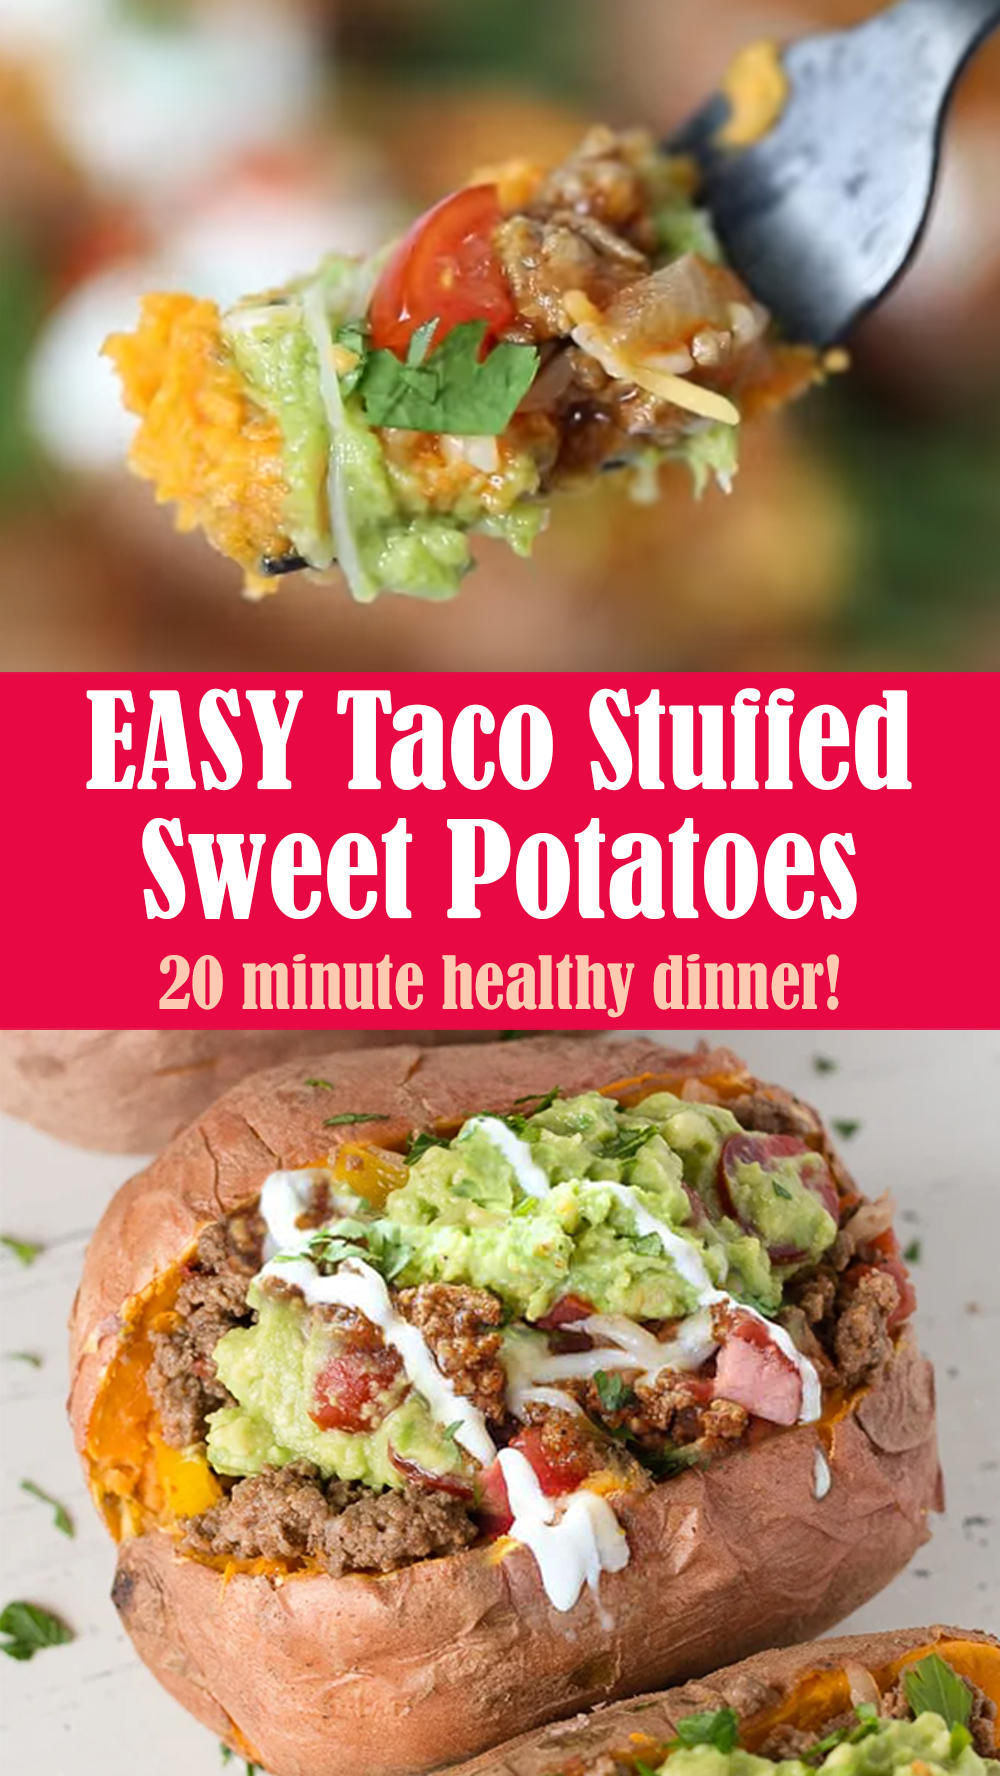 EASY Taco Stuffed Sweet Potatoes